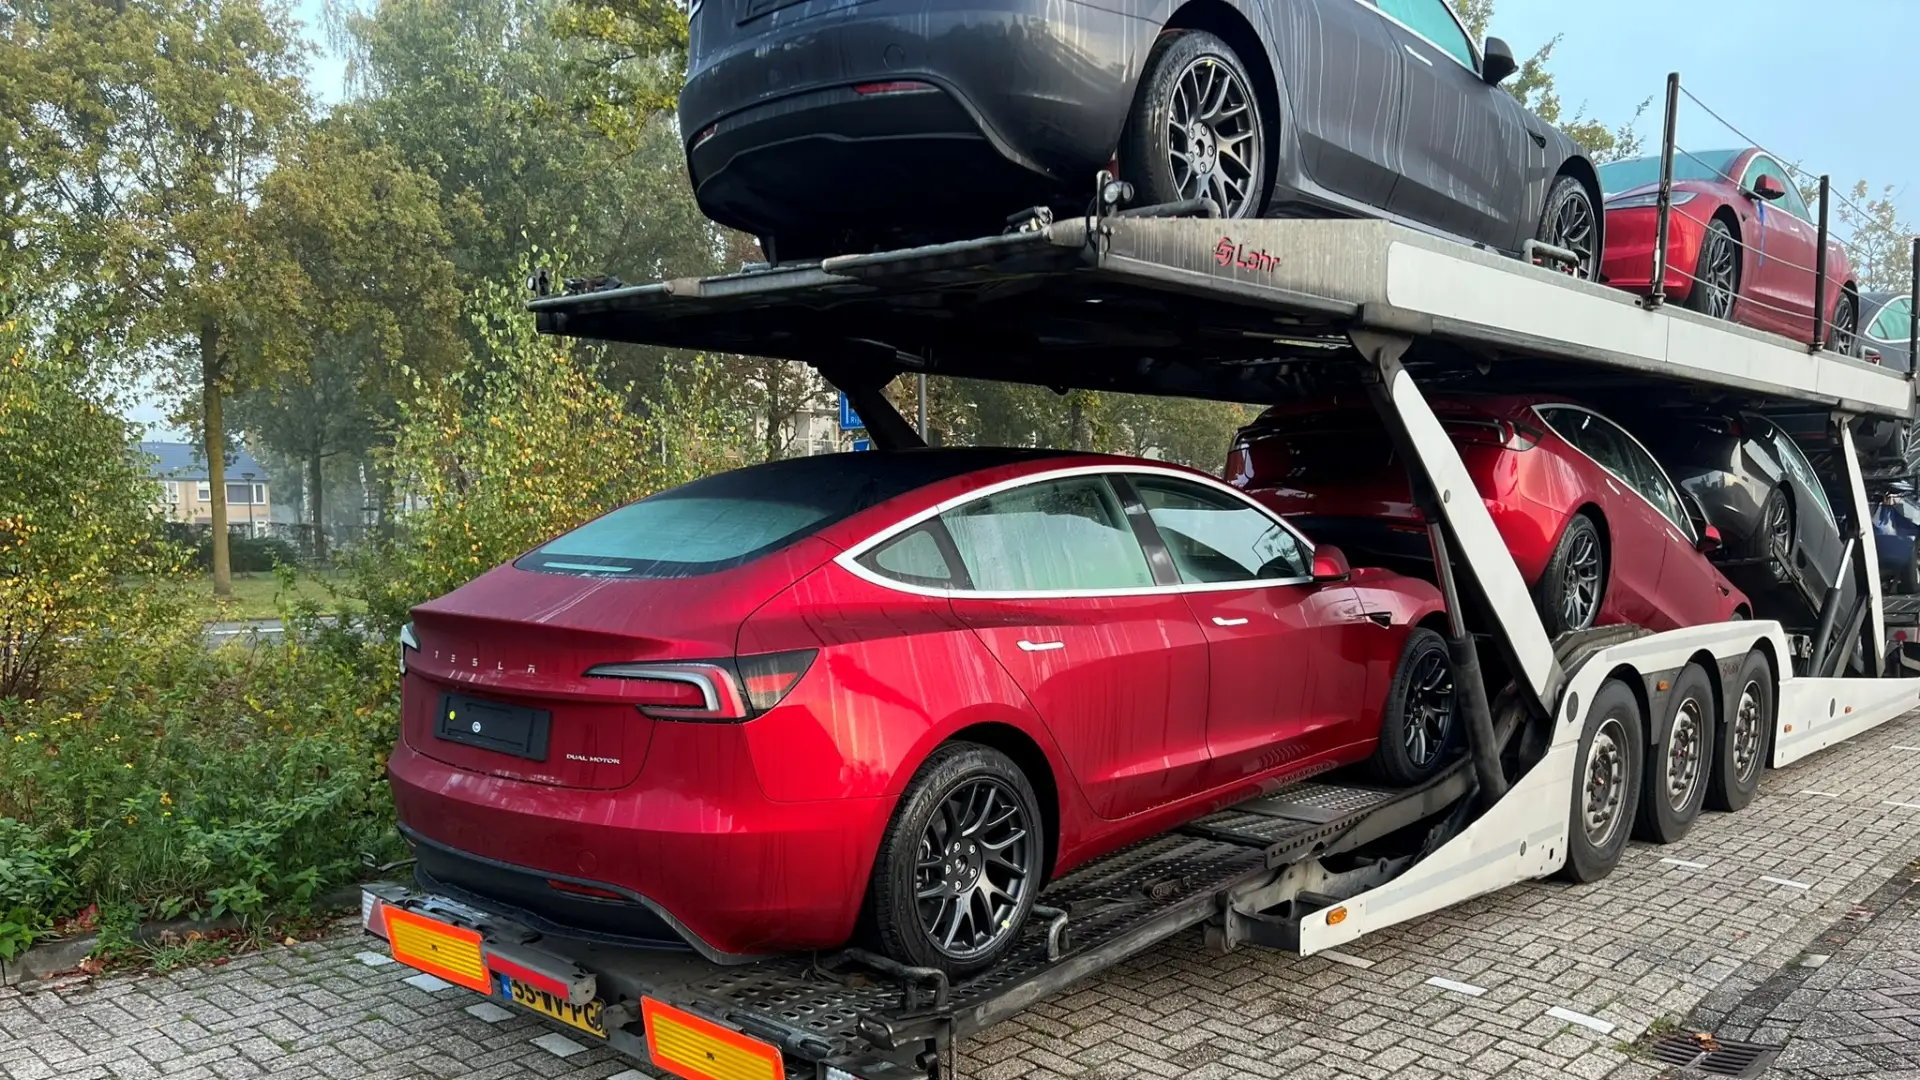 Tesla Model 3 has arrived in Europe